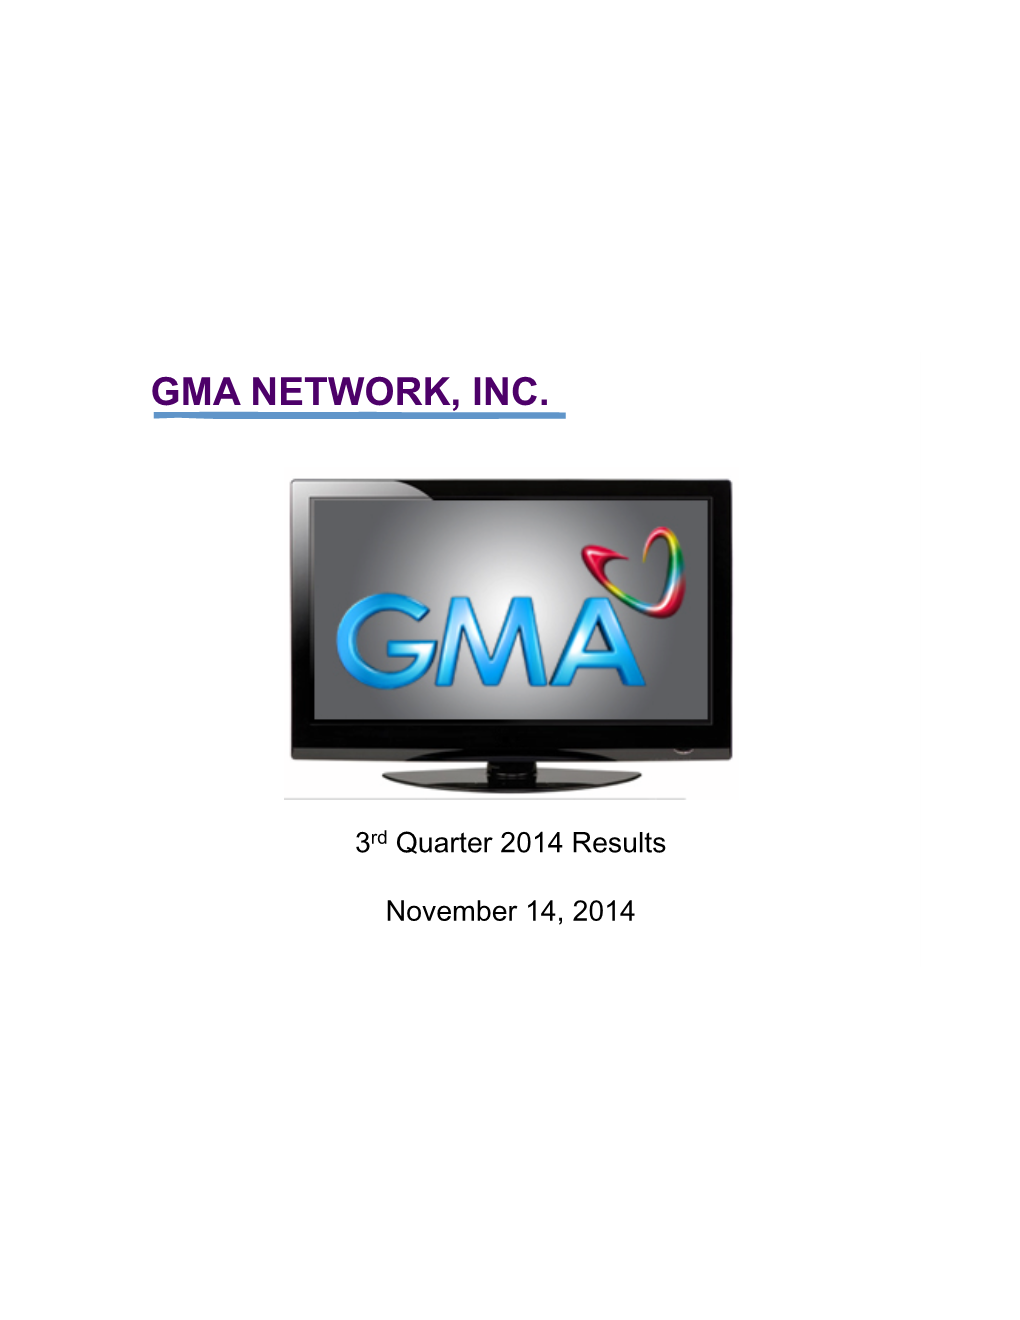 Gma Network, Inc